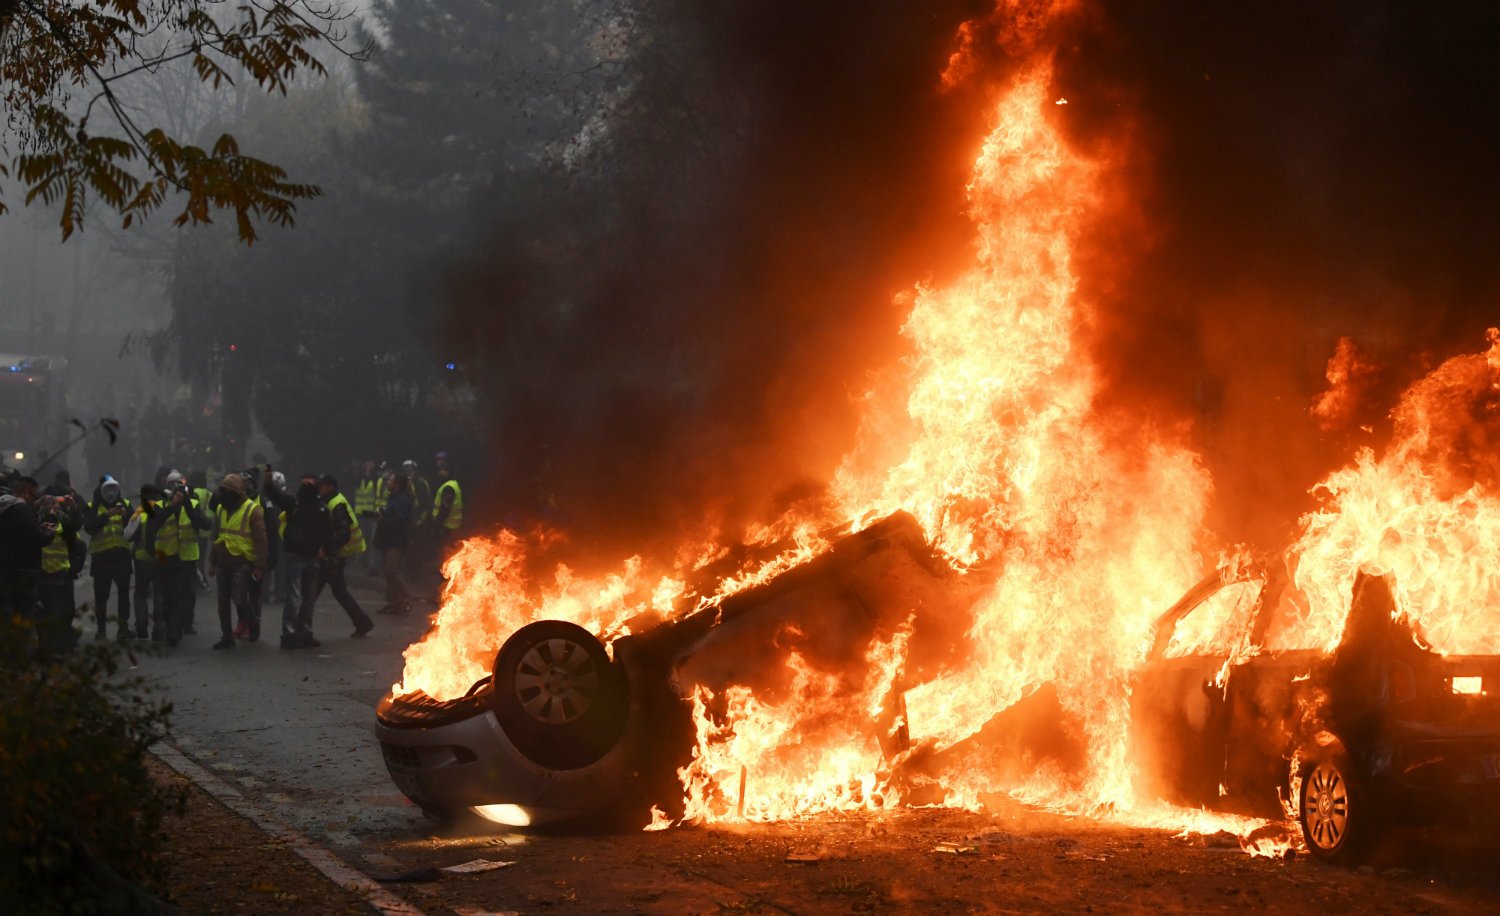 Violent clashes mar fresh anti-Macron protests